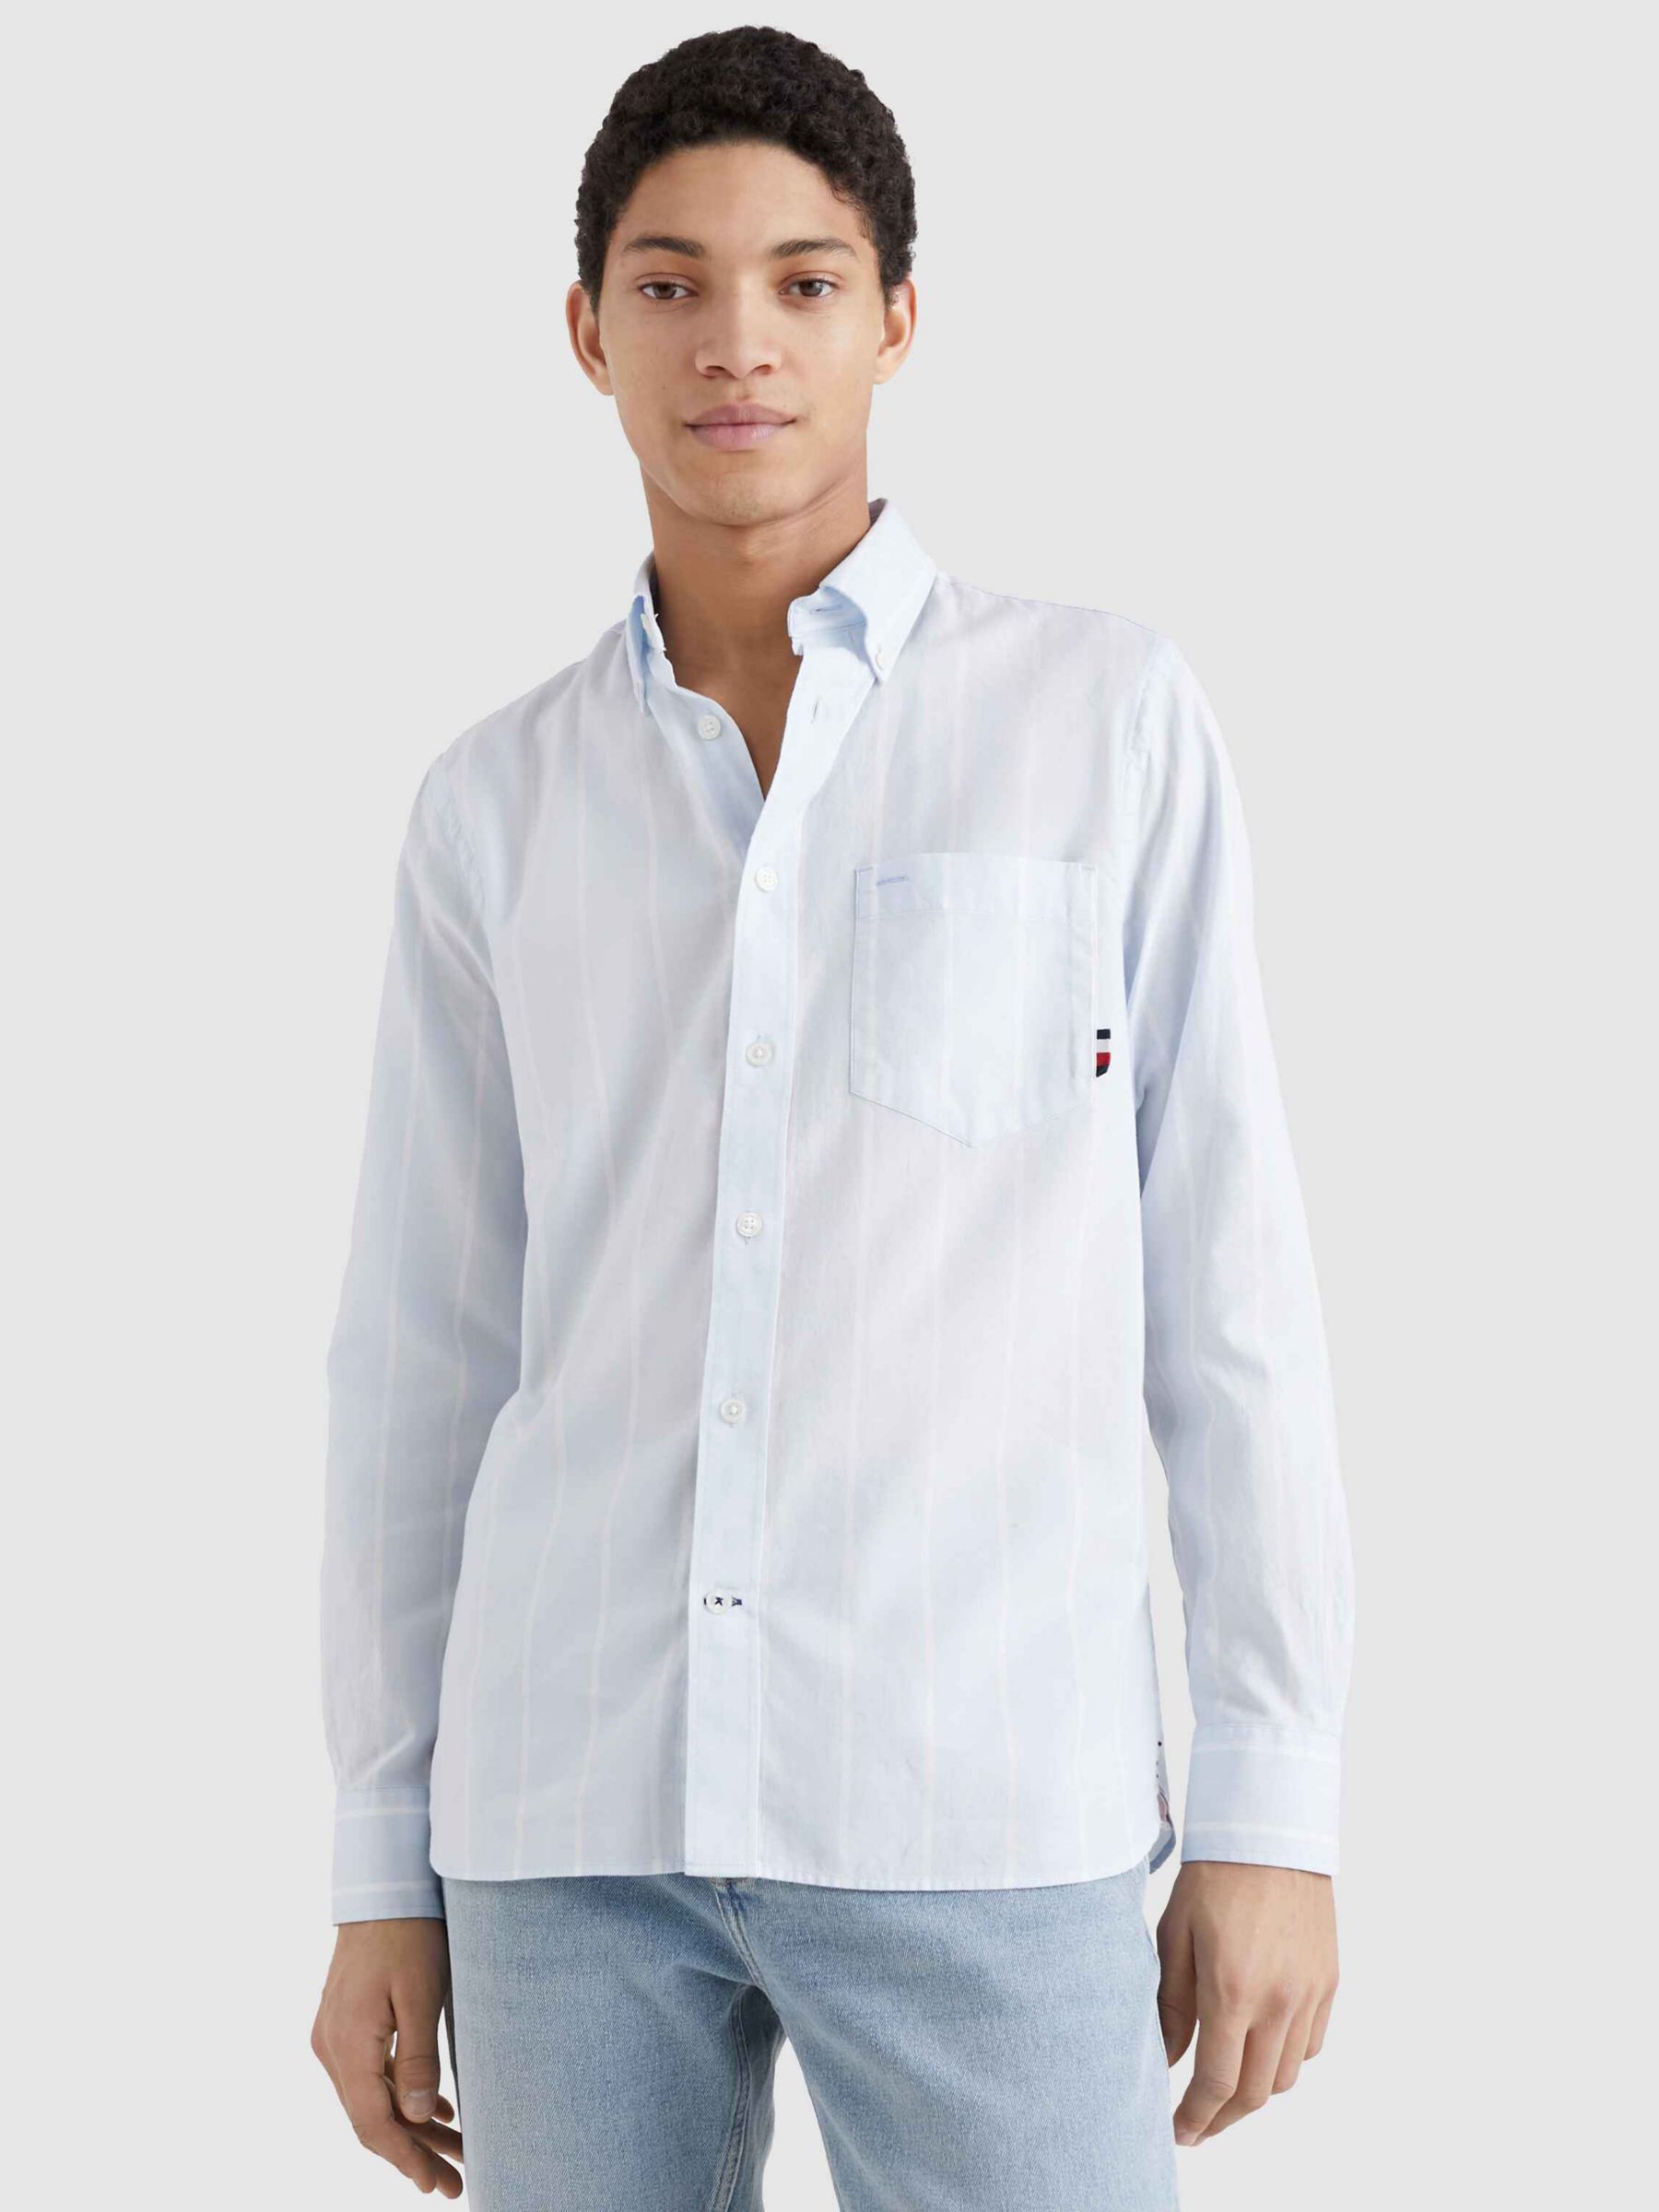 Tommy Hilfiger Stripe Regular Fit Shirt, Breezy Blue/Optic White, XS